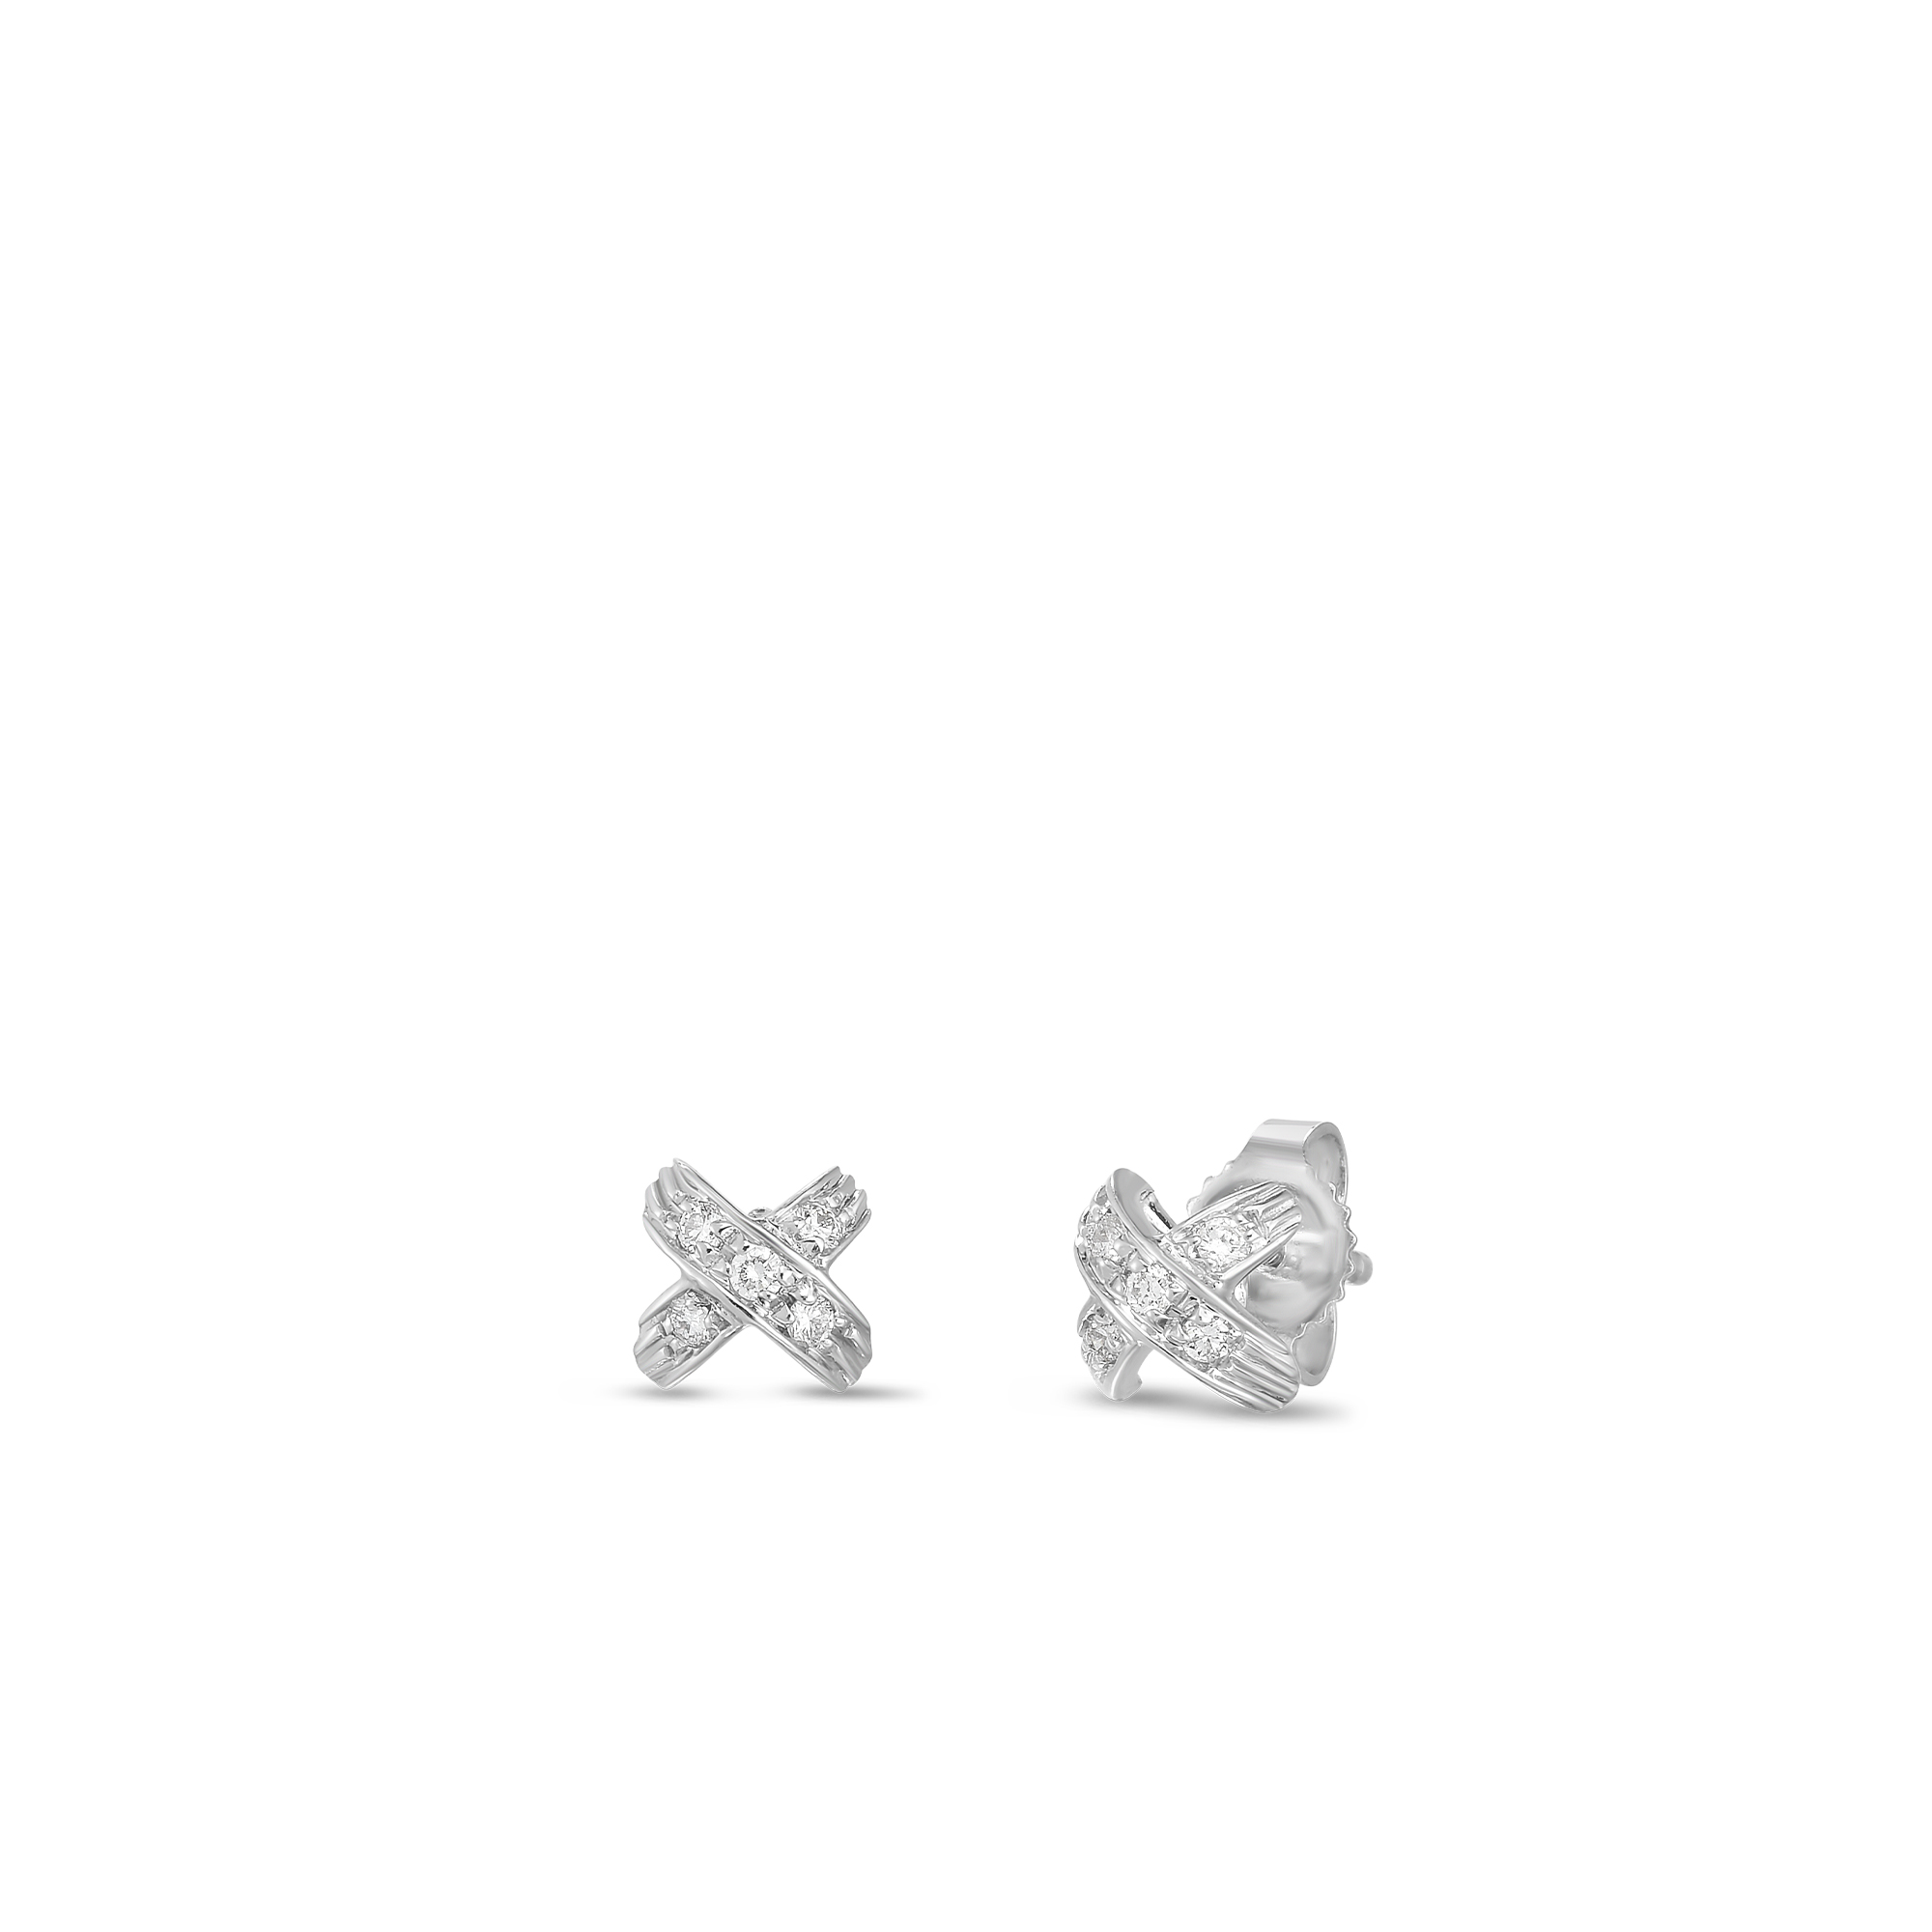 Tiny Treasures ‘x' Earrings